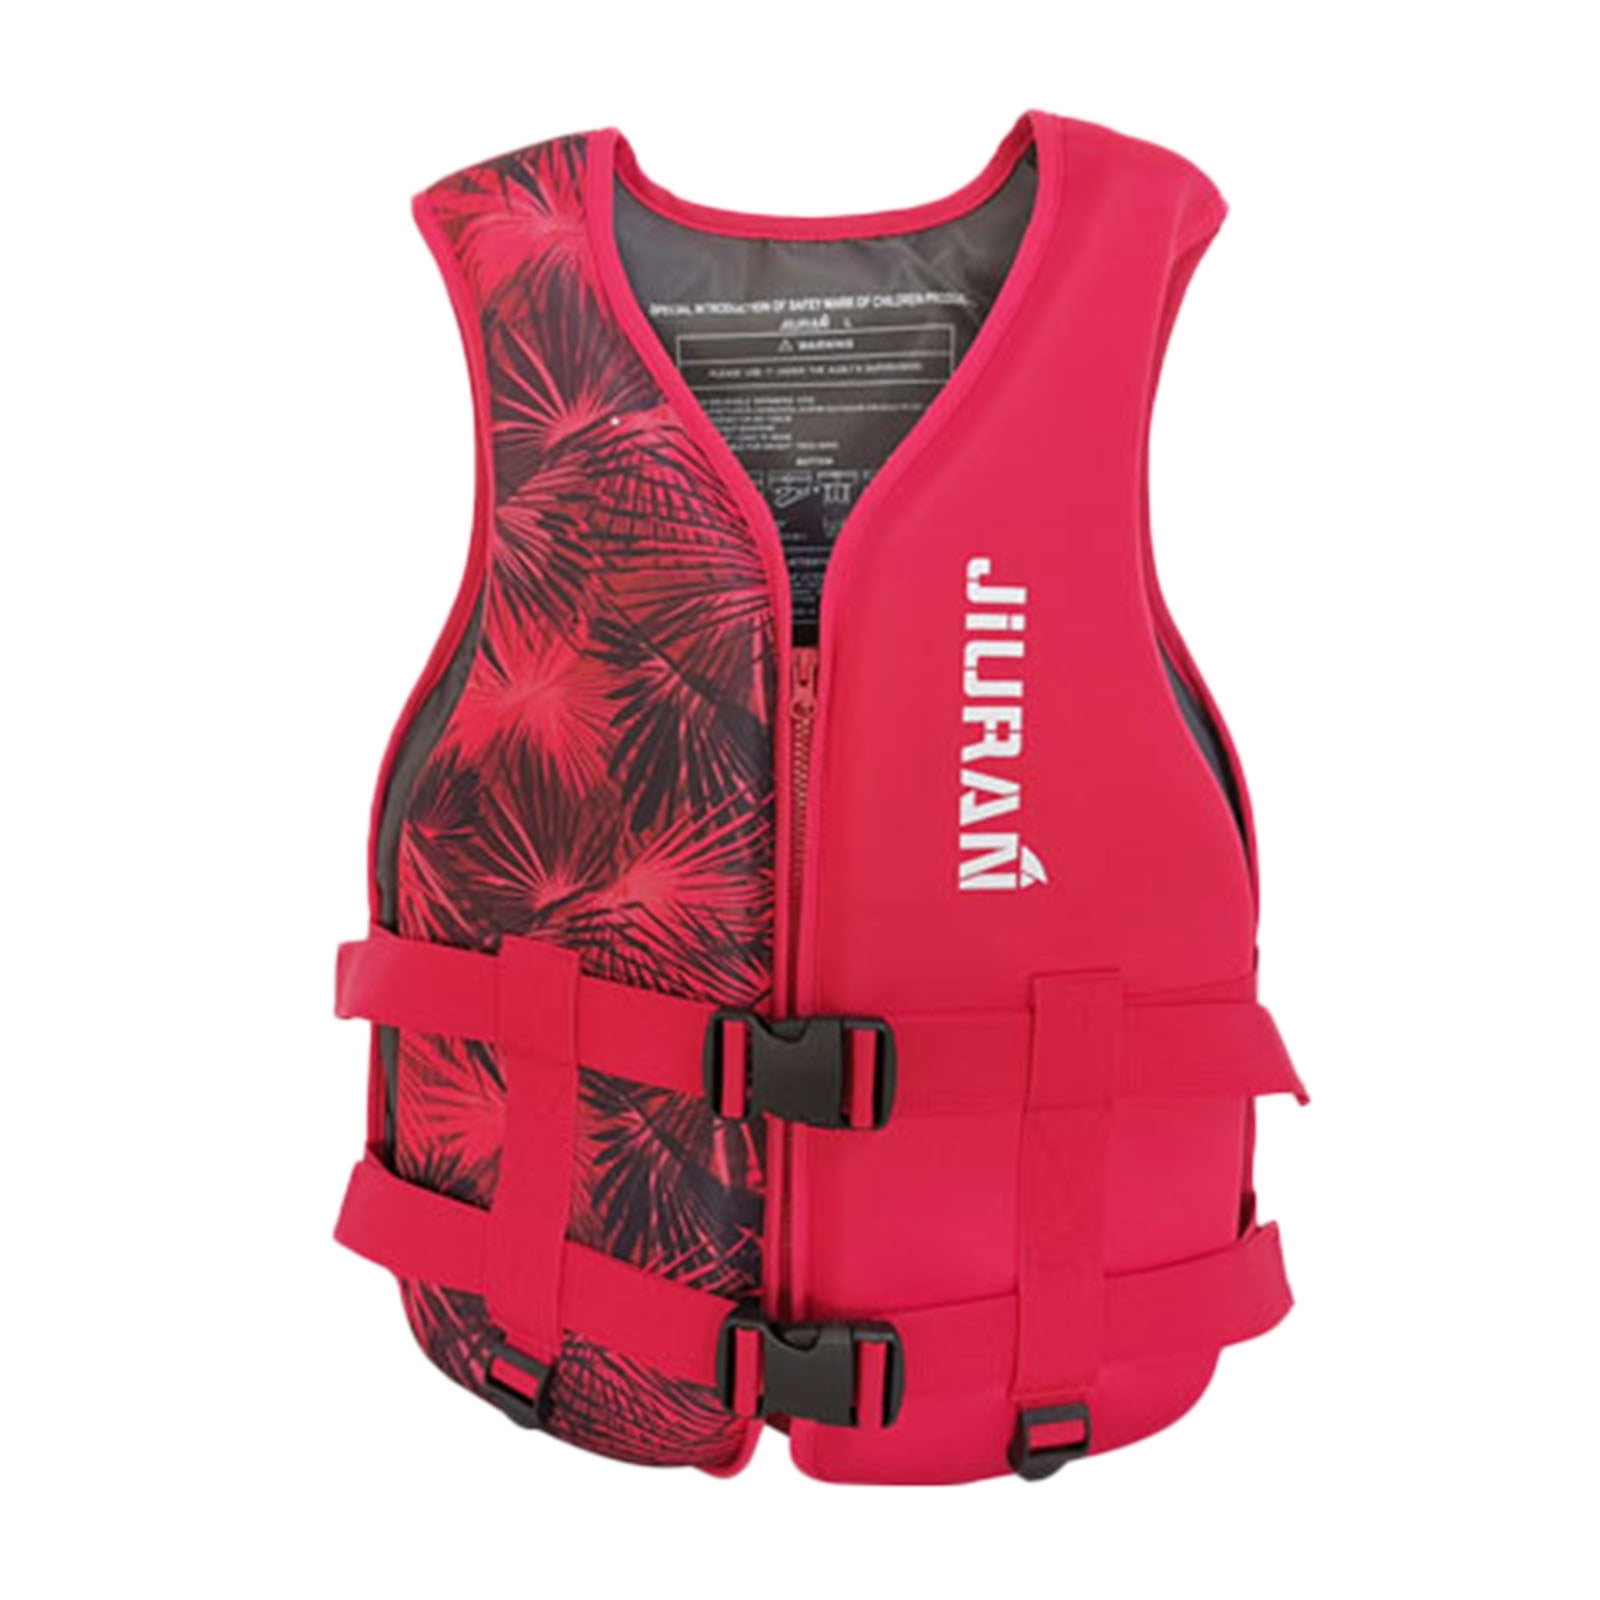 Size S Kids Life Jacket Aid Vest Kayak Ski Buoyancy Fishing Watersport Safety 